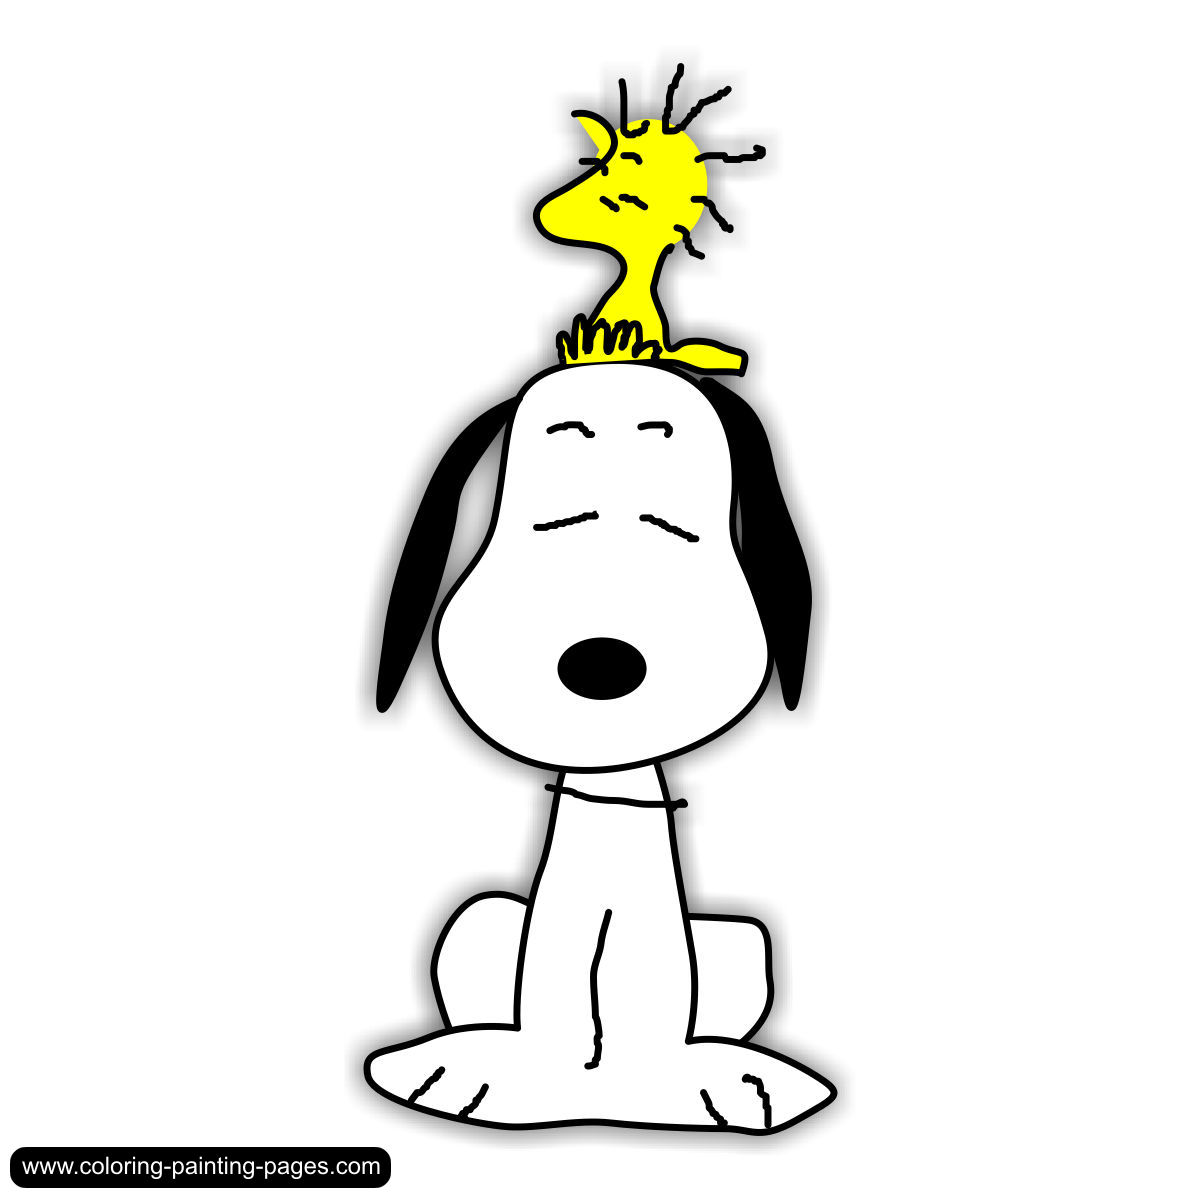 Dancing Snoopy And Woodstock - HD Wallpaper 